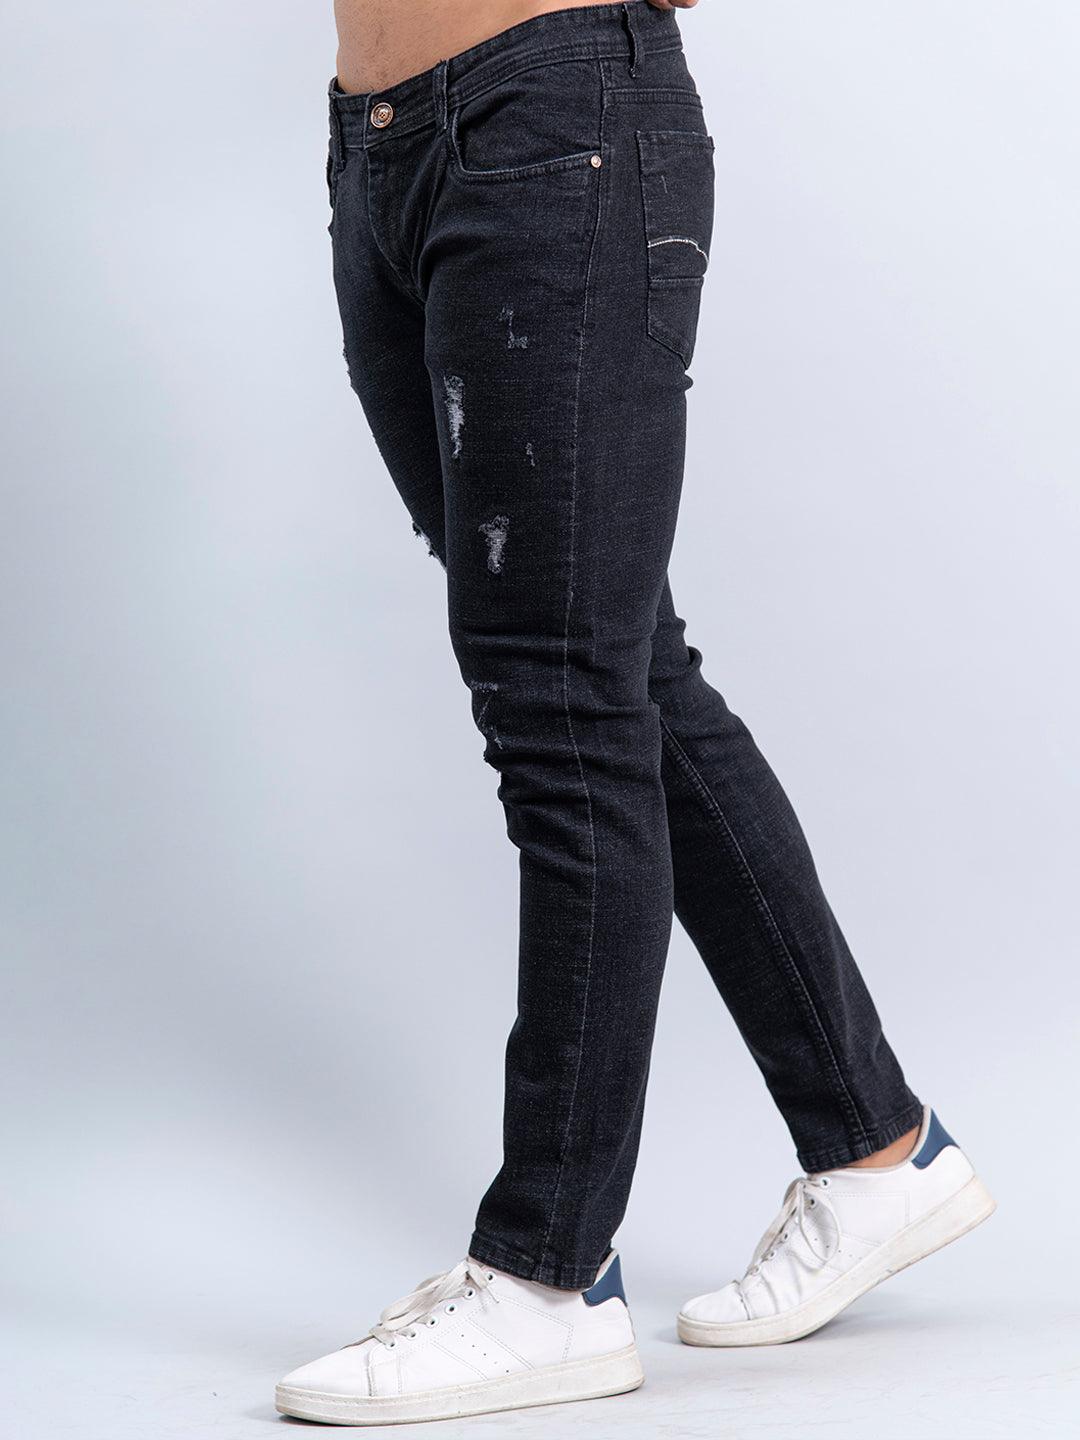 Black Denim Ankle Length Stretchable Men's Jeans